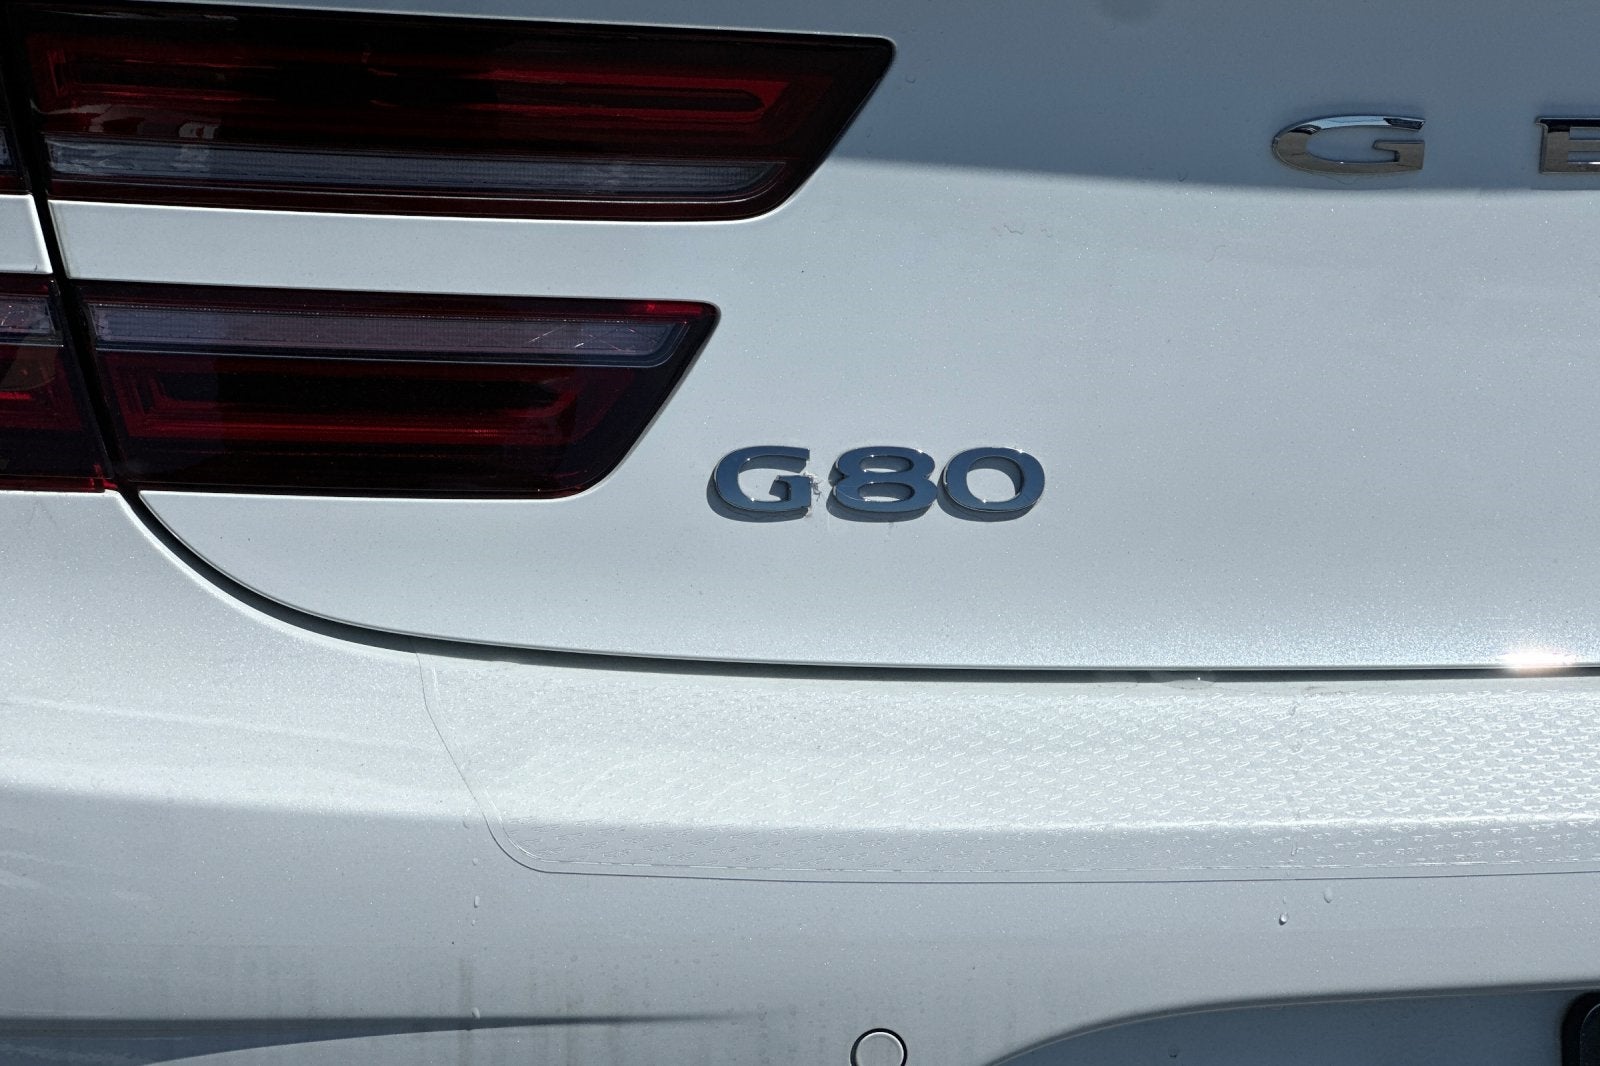 2024 Genesis Electrified G80 Advanced